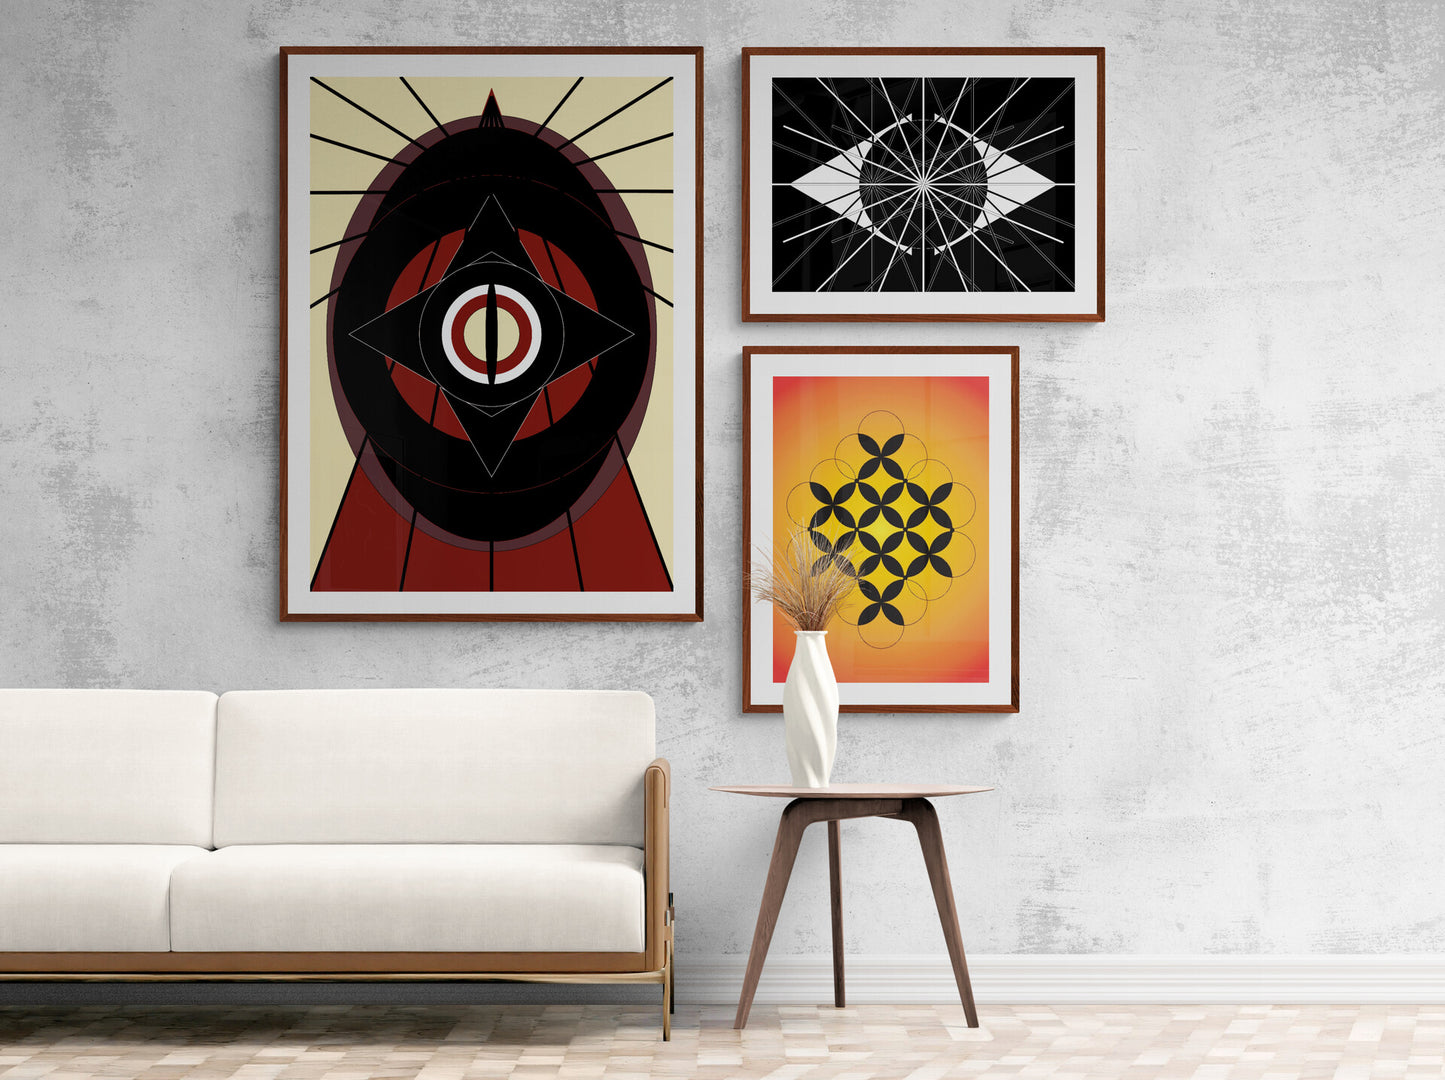 Wall art poster contemporary graphic design art work abstract, physical item prints Bauhaus inspired Scandinavian Swedish interior design